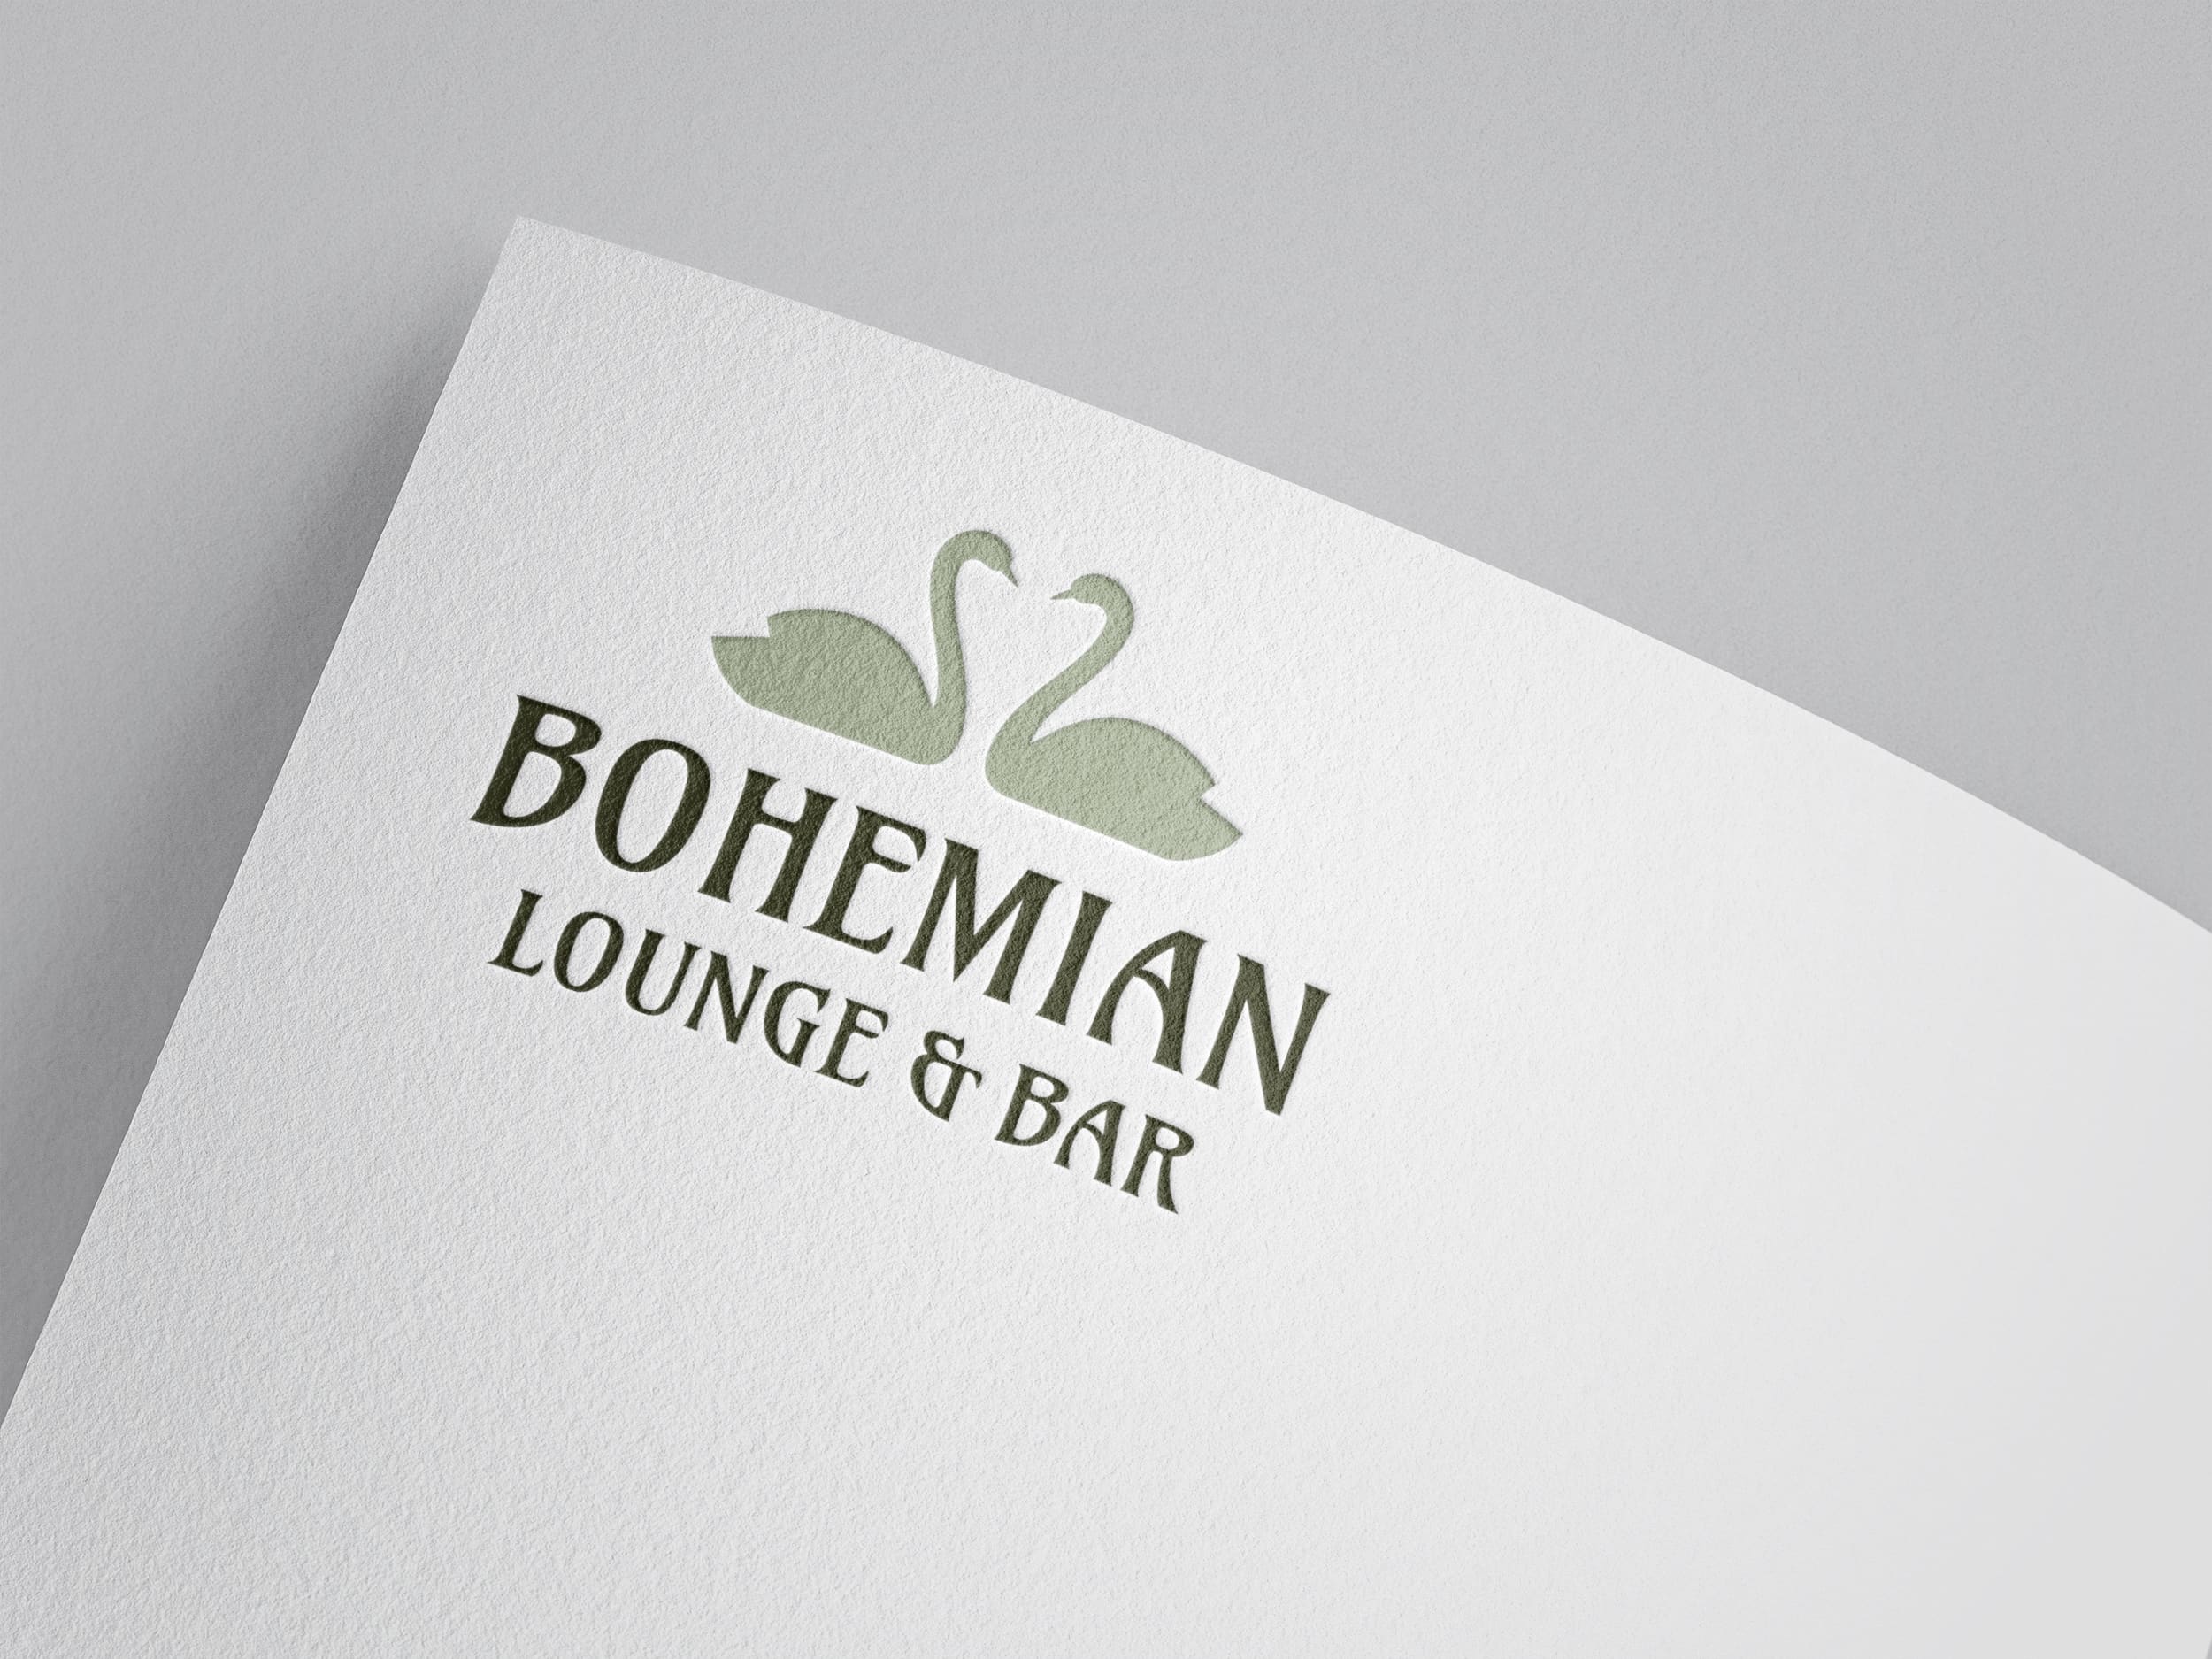 Branding Bohemian Lounge & Bar